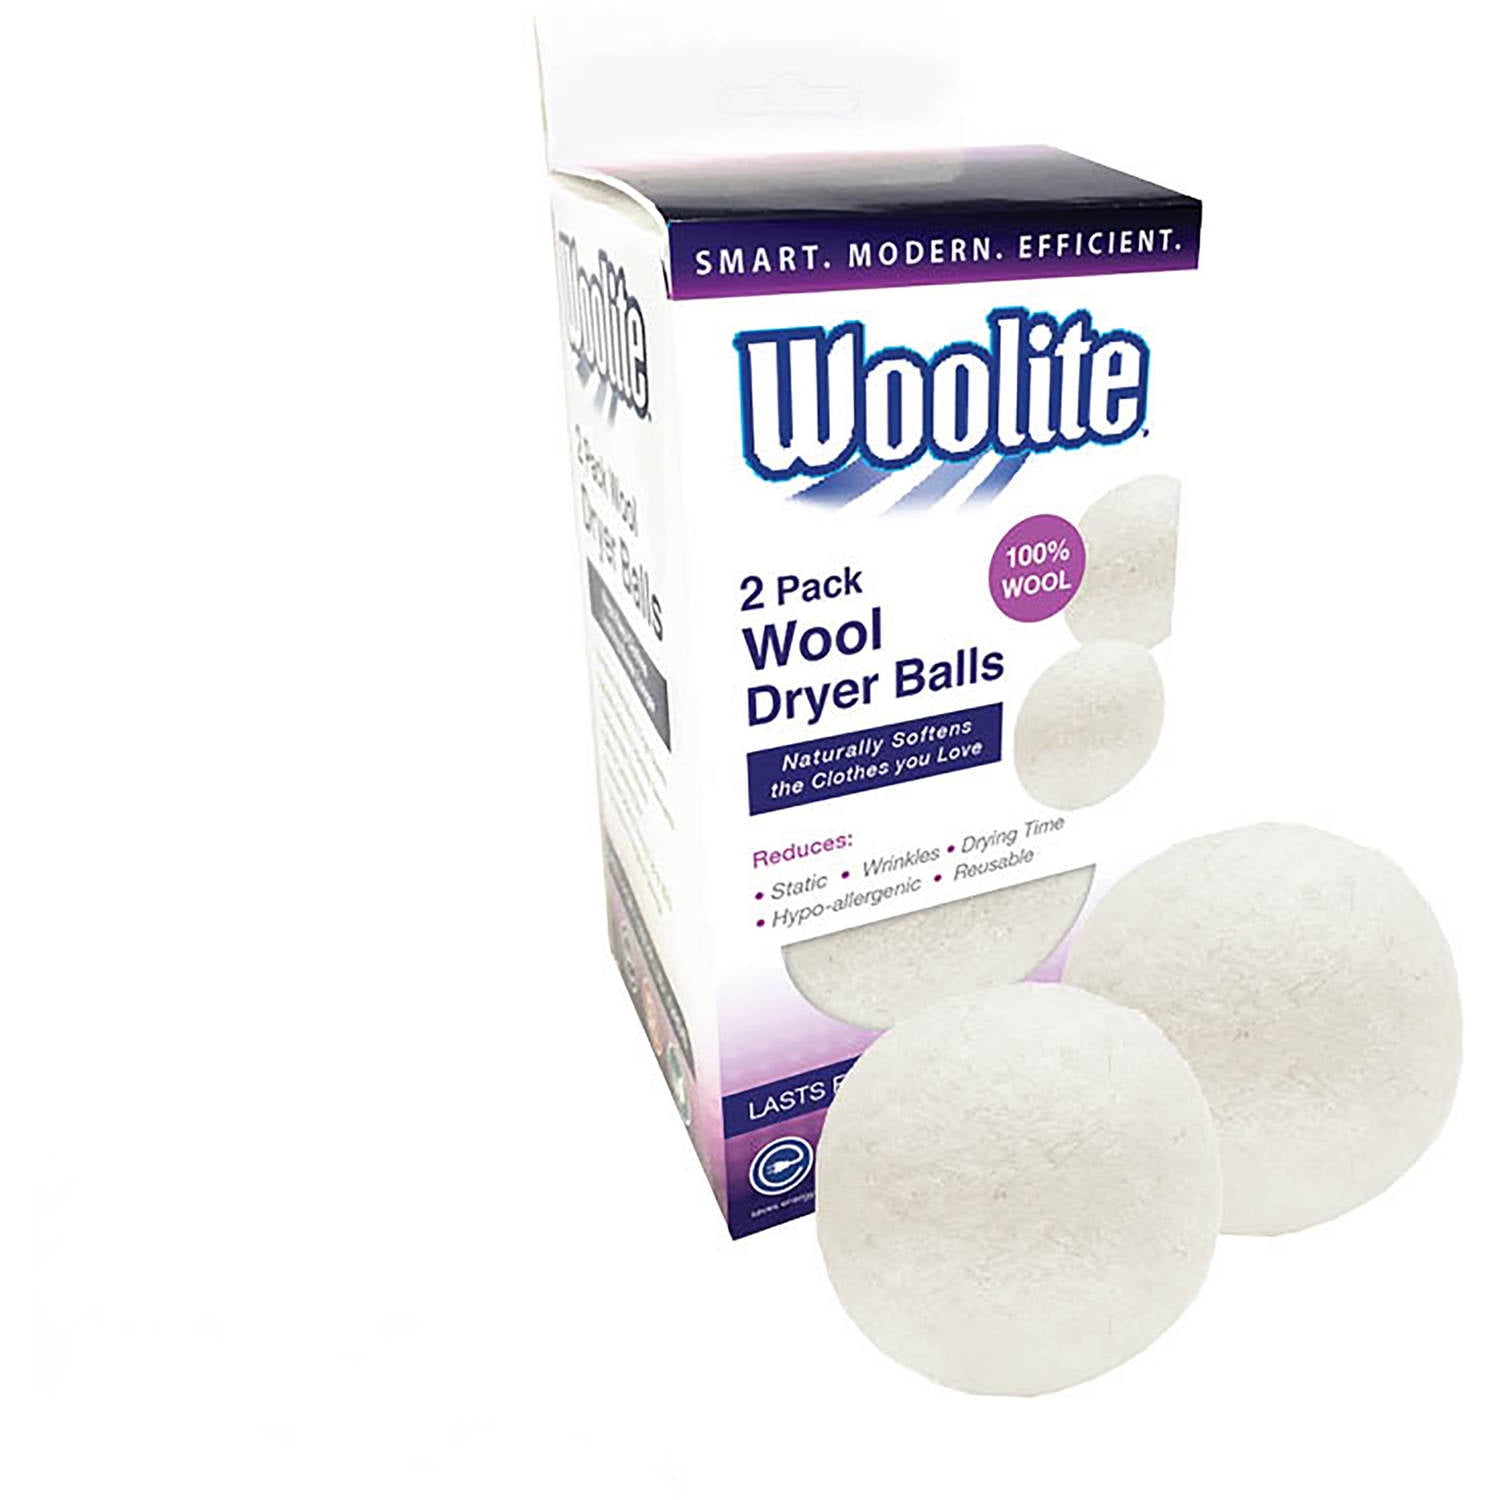 Woolite 2-Pack Dryer Balls - Walmart.com - Walmart.com